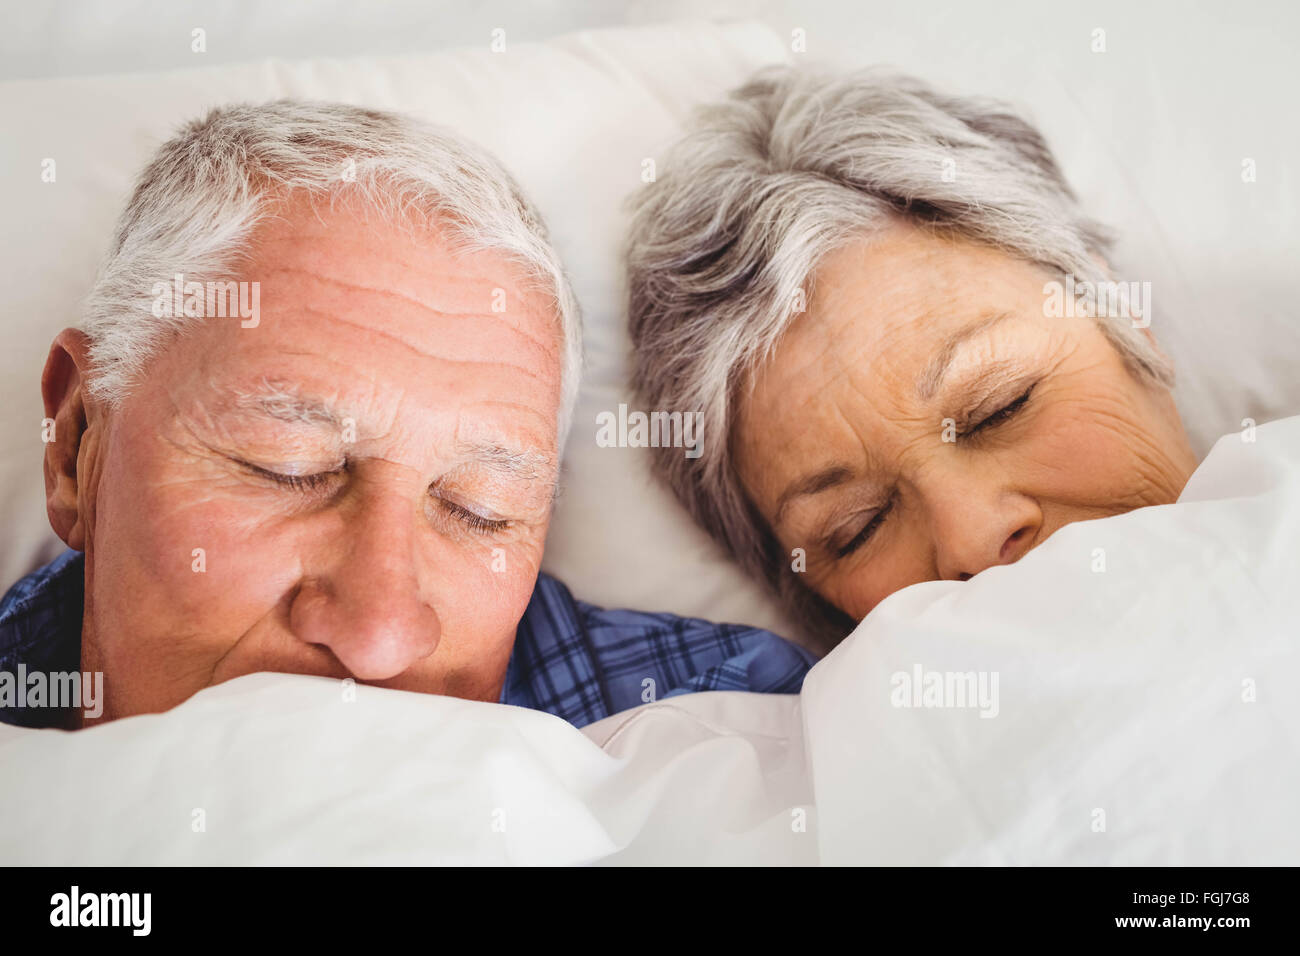 Senior couple sleeping on bed Stock Photo